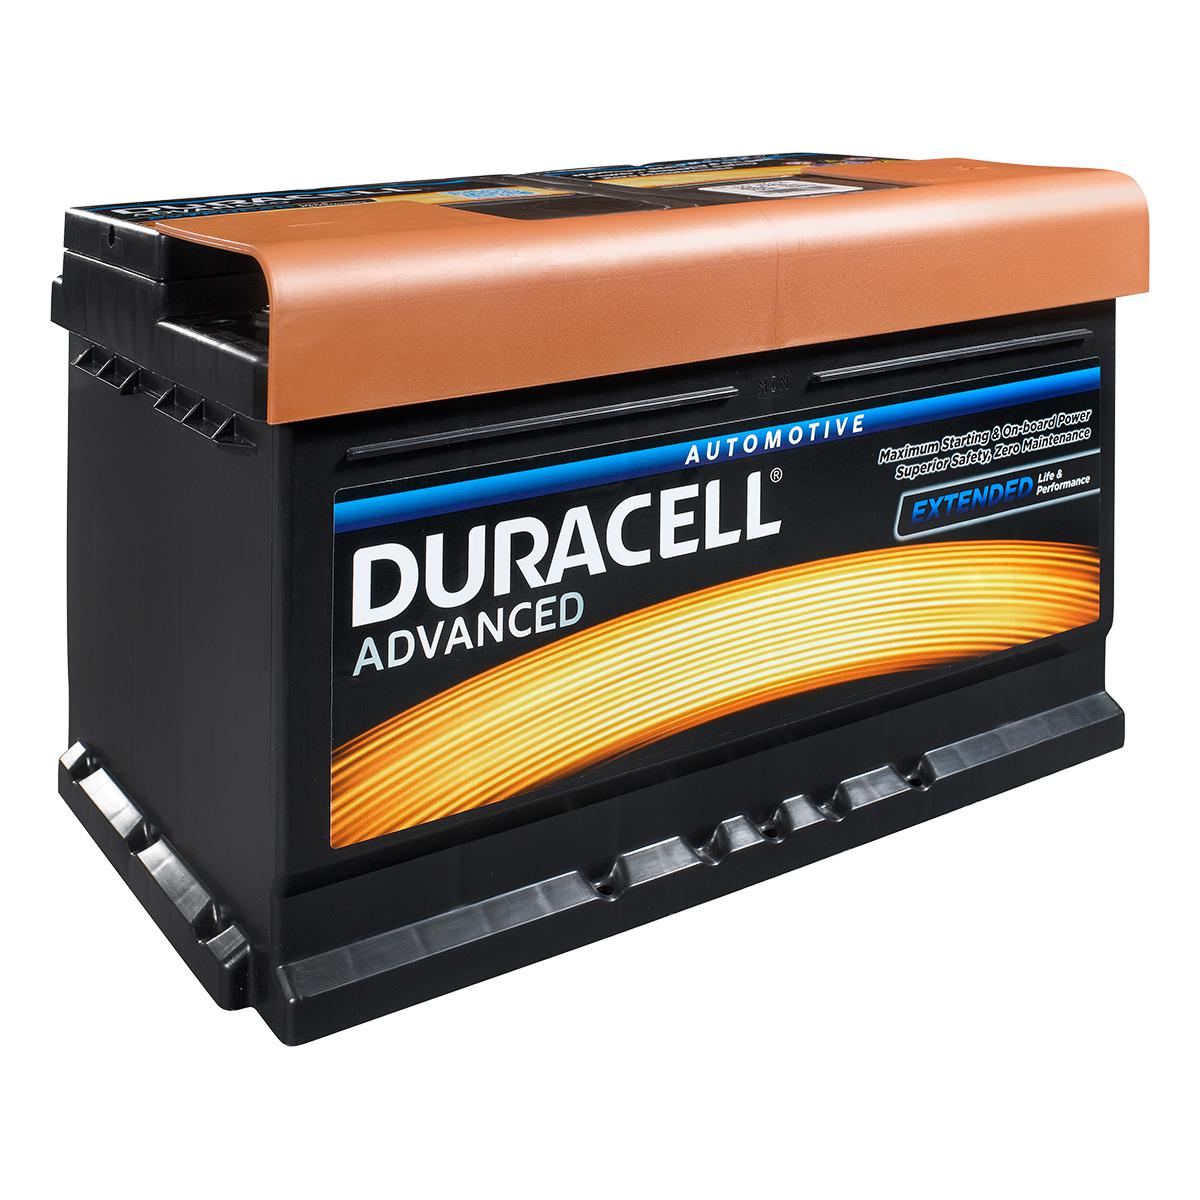 duracell-110-da80-advanced-car-battery-www-batterycharged-co-uk